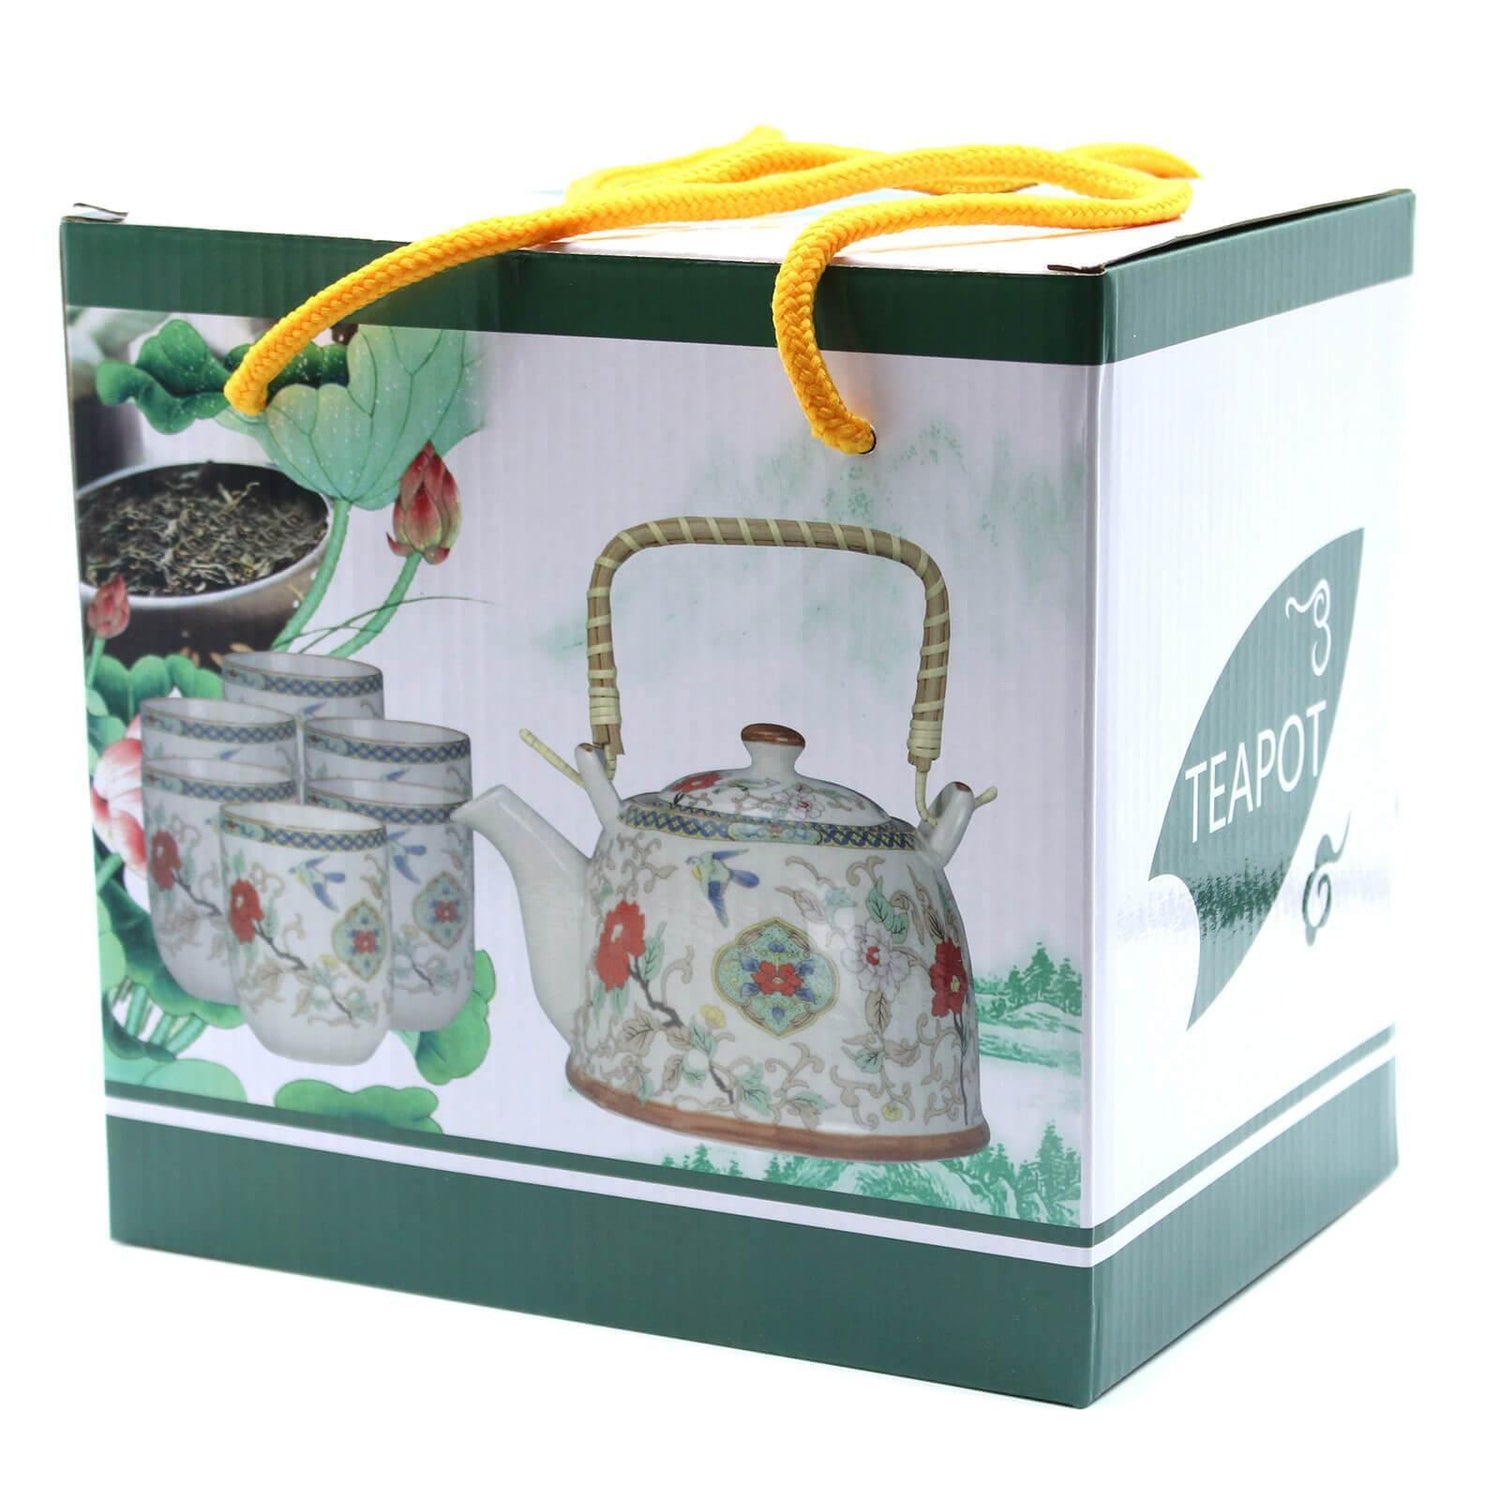 Herbal Teapot Set - Bell Tent Sussex